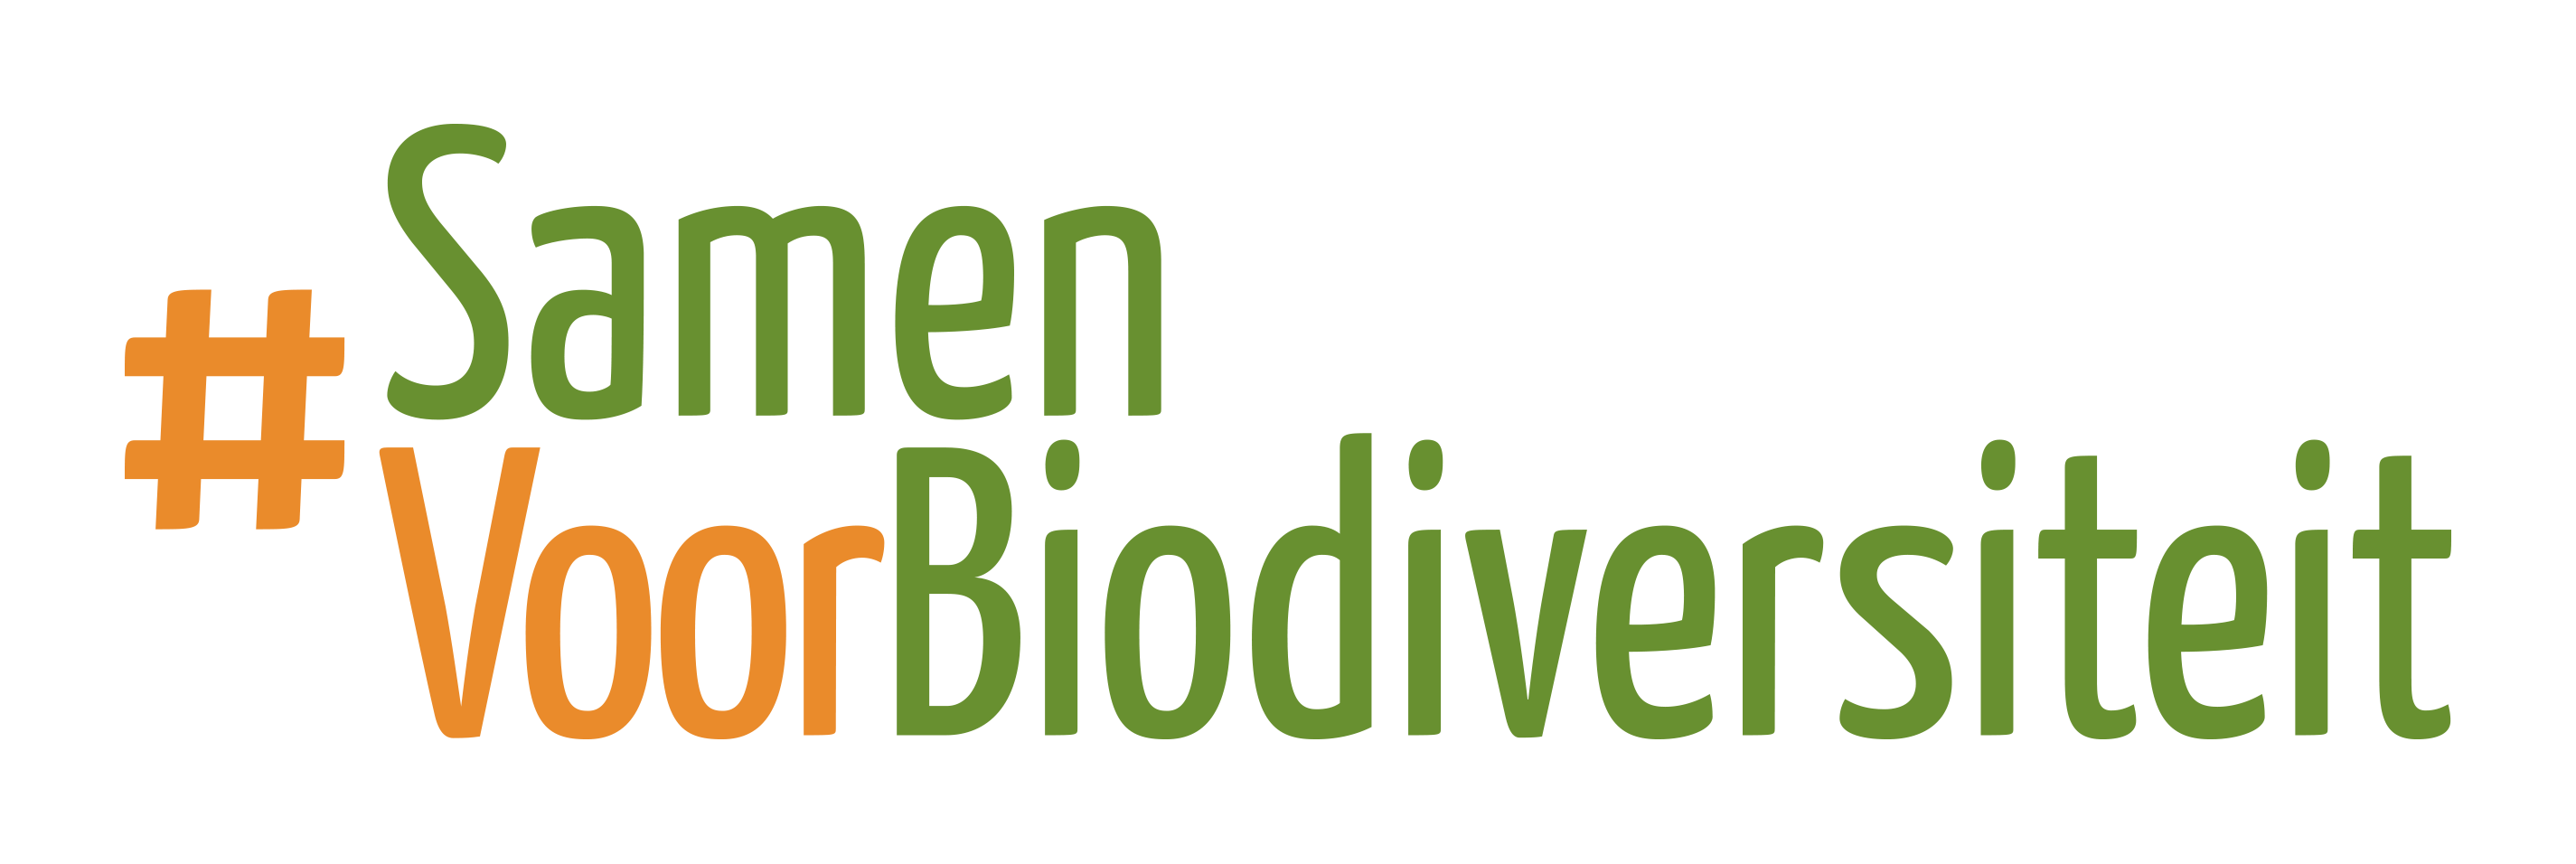 Hashtag Biodiversity nl